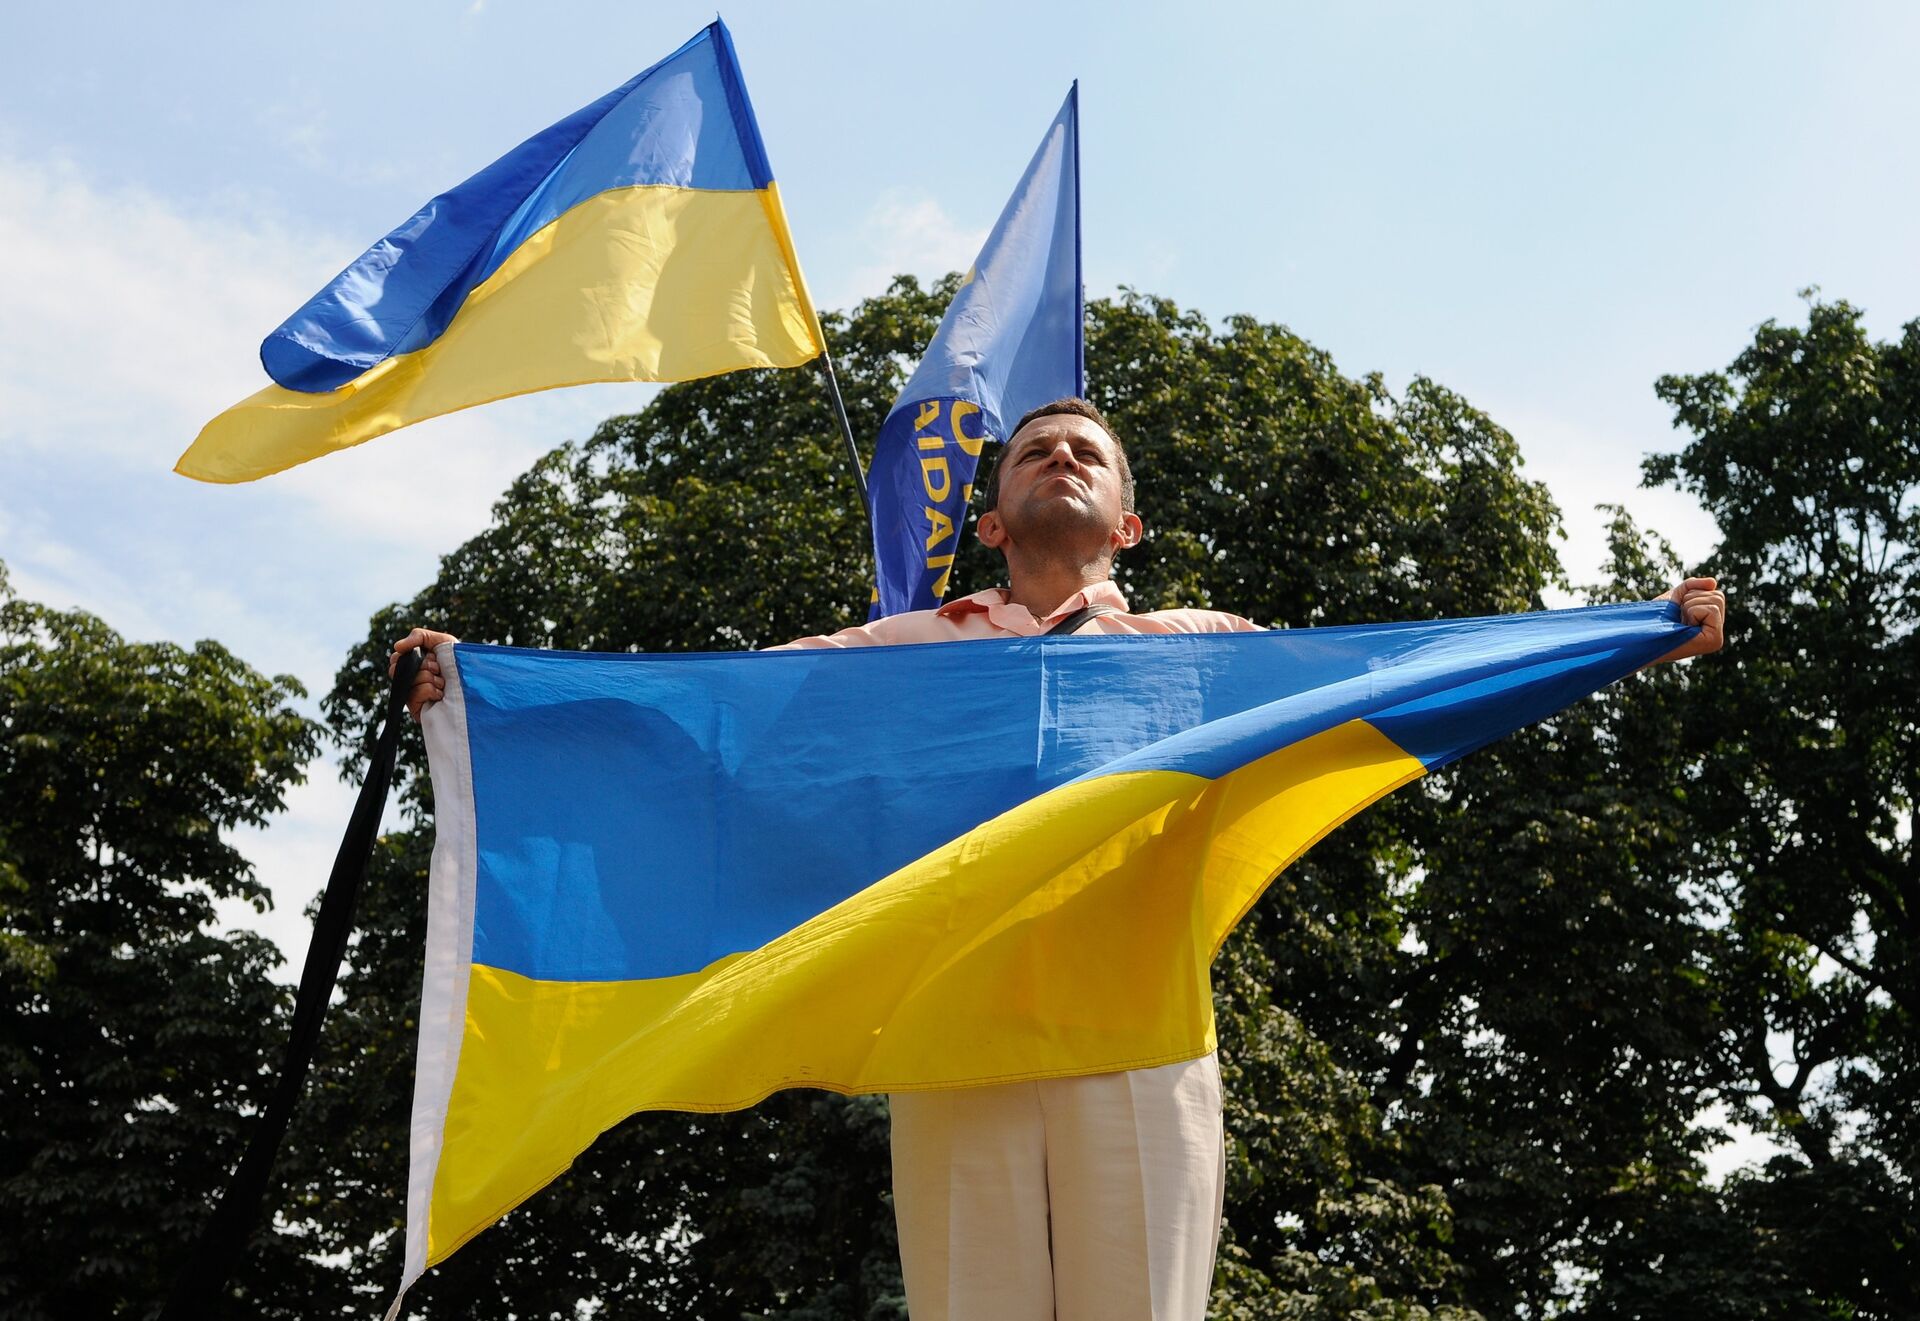 Зеленый украинец. Флаг Украины. Современные украинцы. Украинцы с флагом. Парень с флагом Украины.